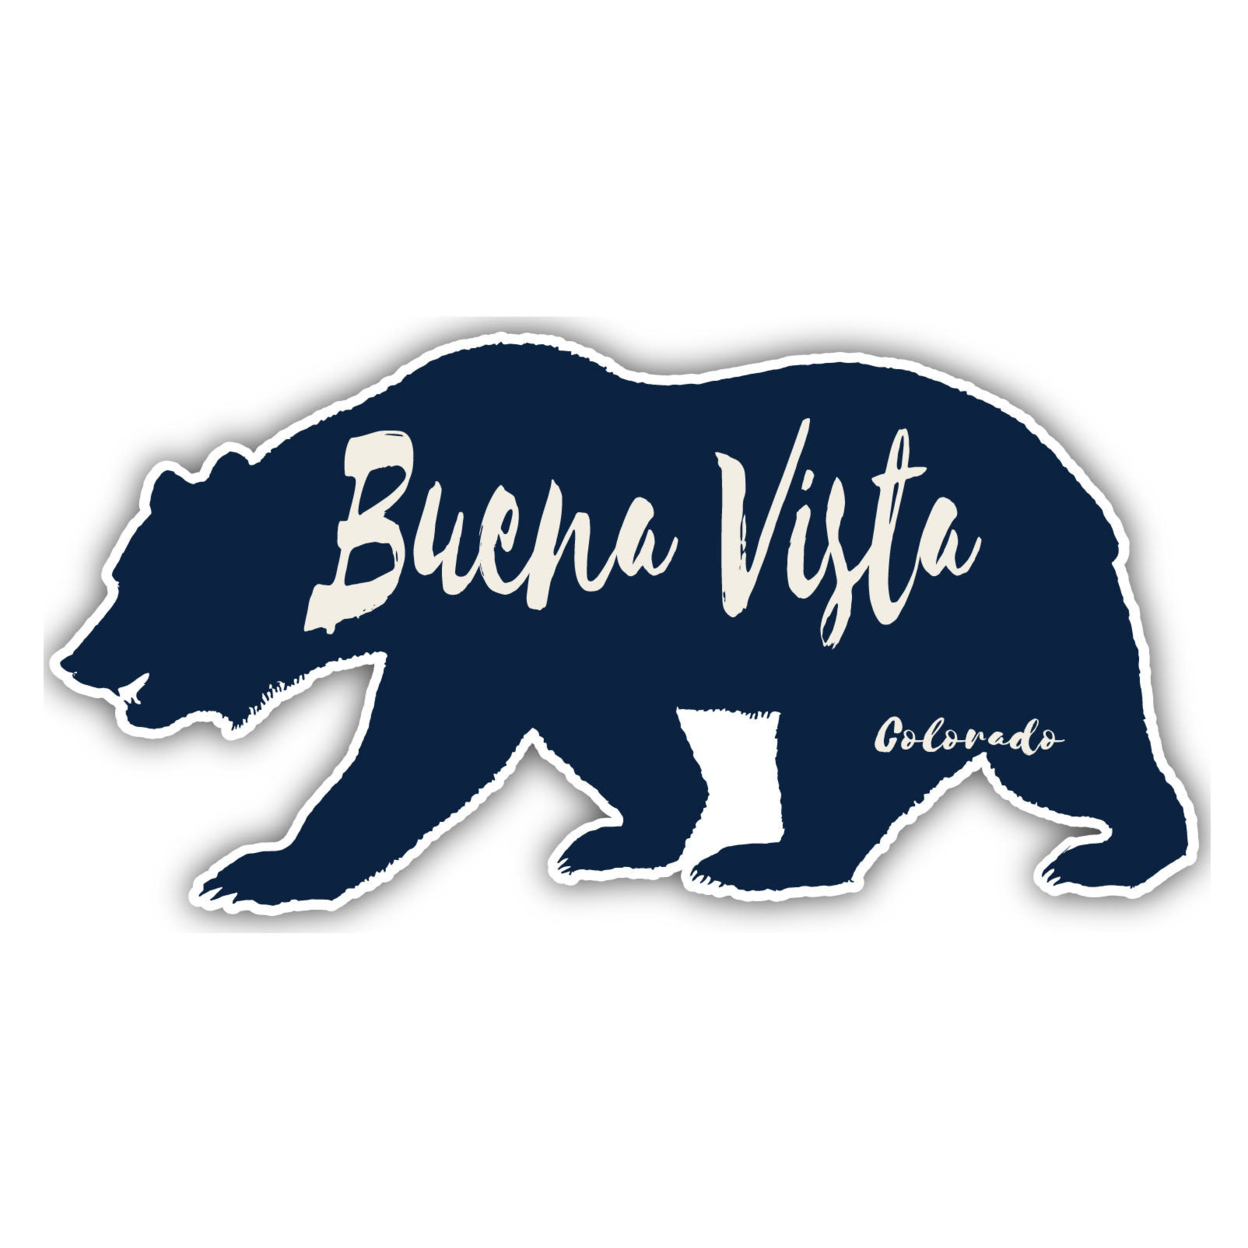 Buena Vista Colorado Souvenir Decorative Stickers (Choose Theme And Size) - 4-Pack, 4-Inch, Bear